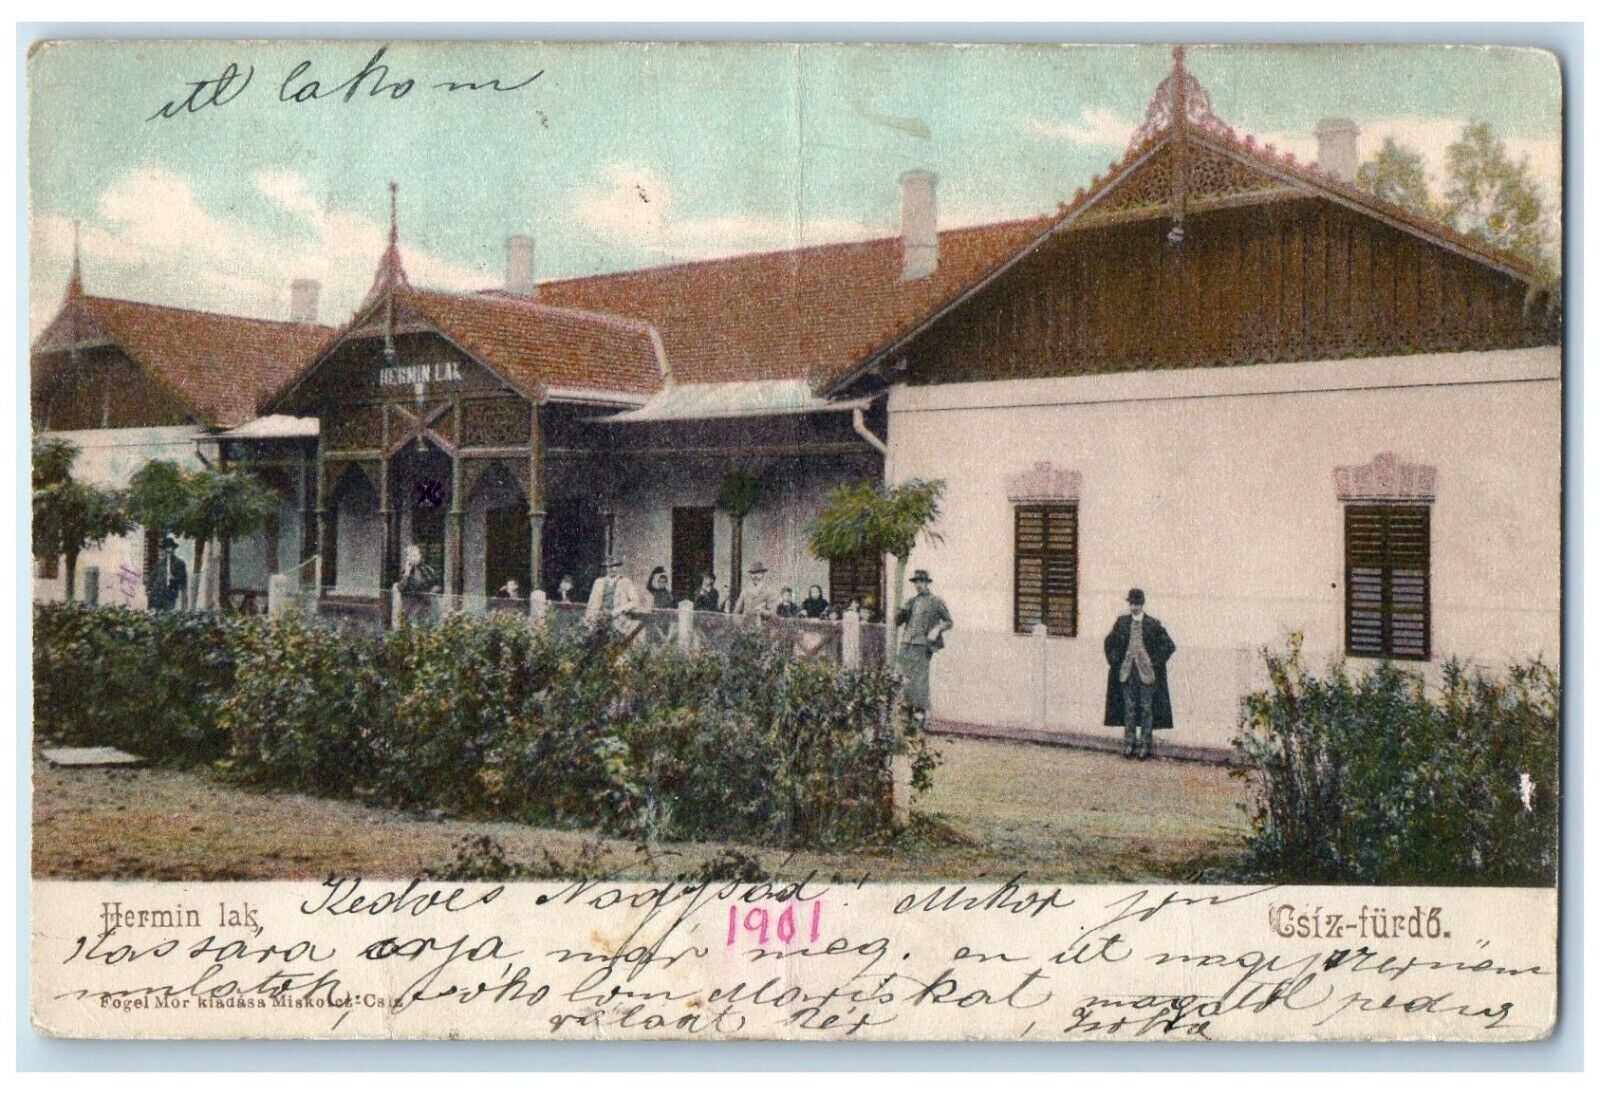 1901 View of Hermin Lak Building Csizfurdo Slovakia Antique Postcard